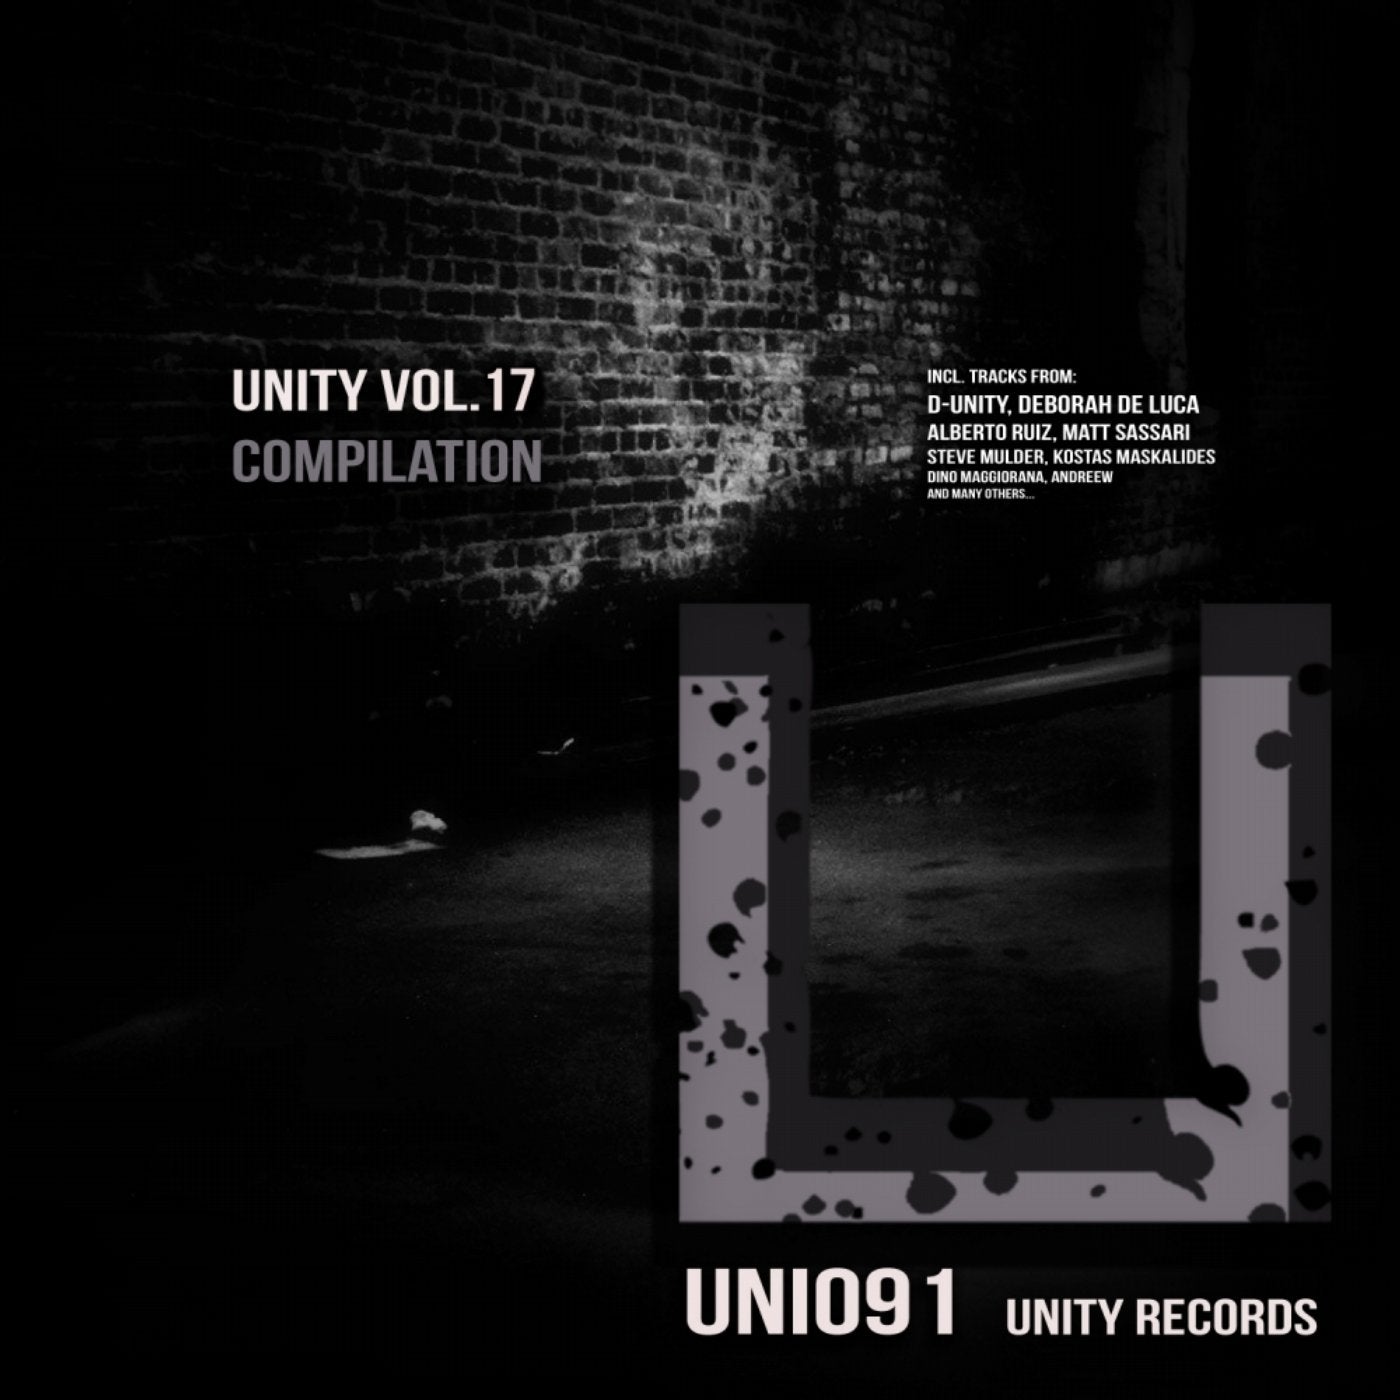 Unity, Vol. 17 Compilation